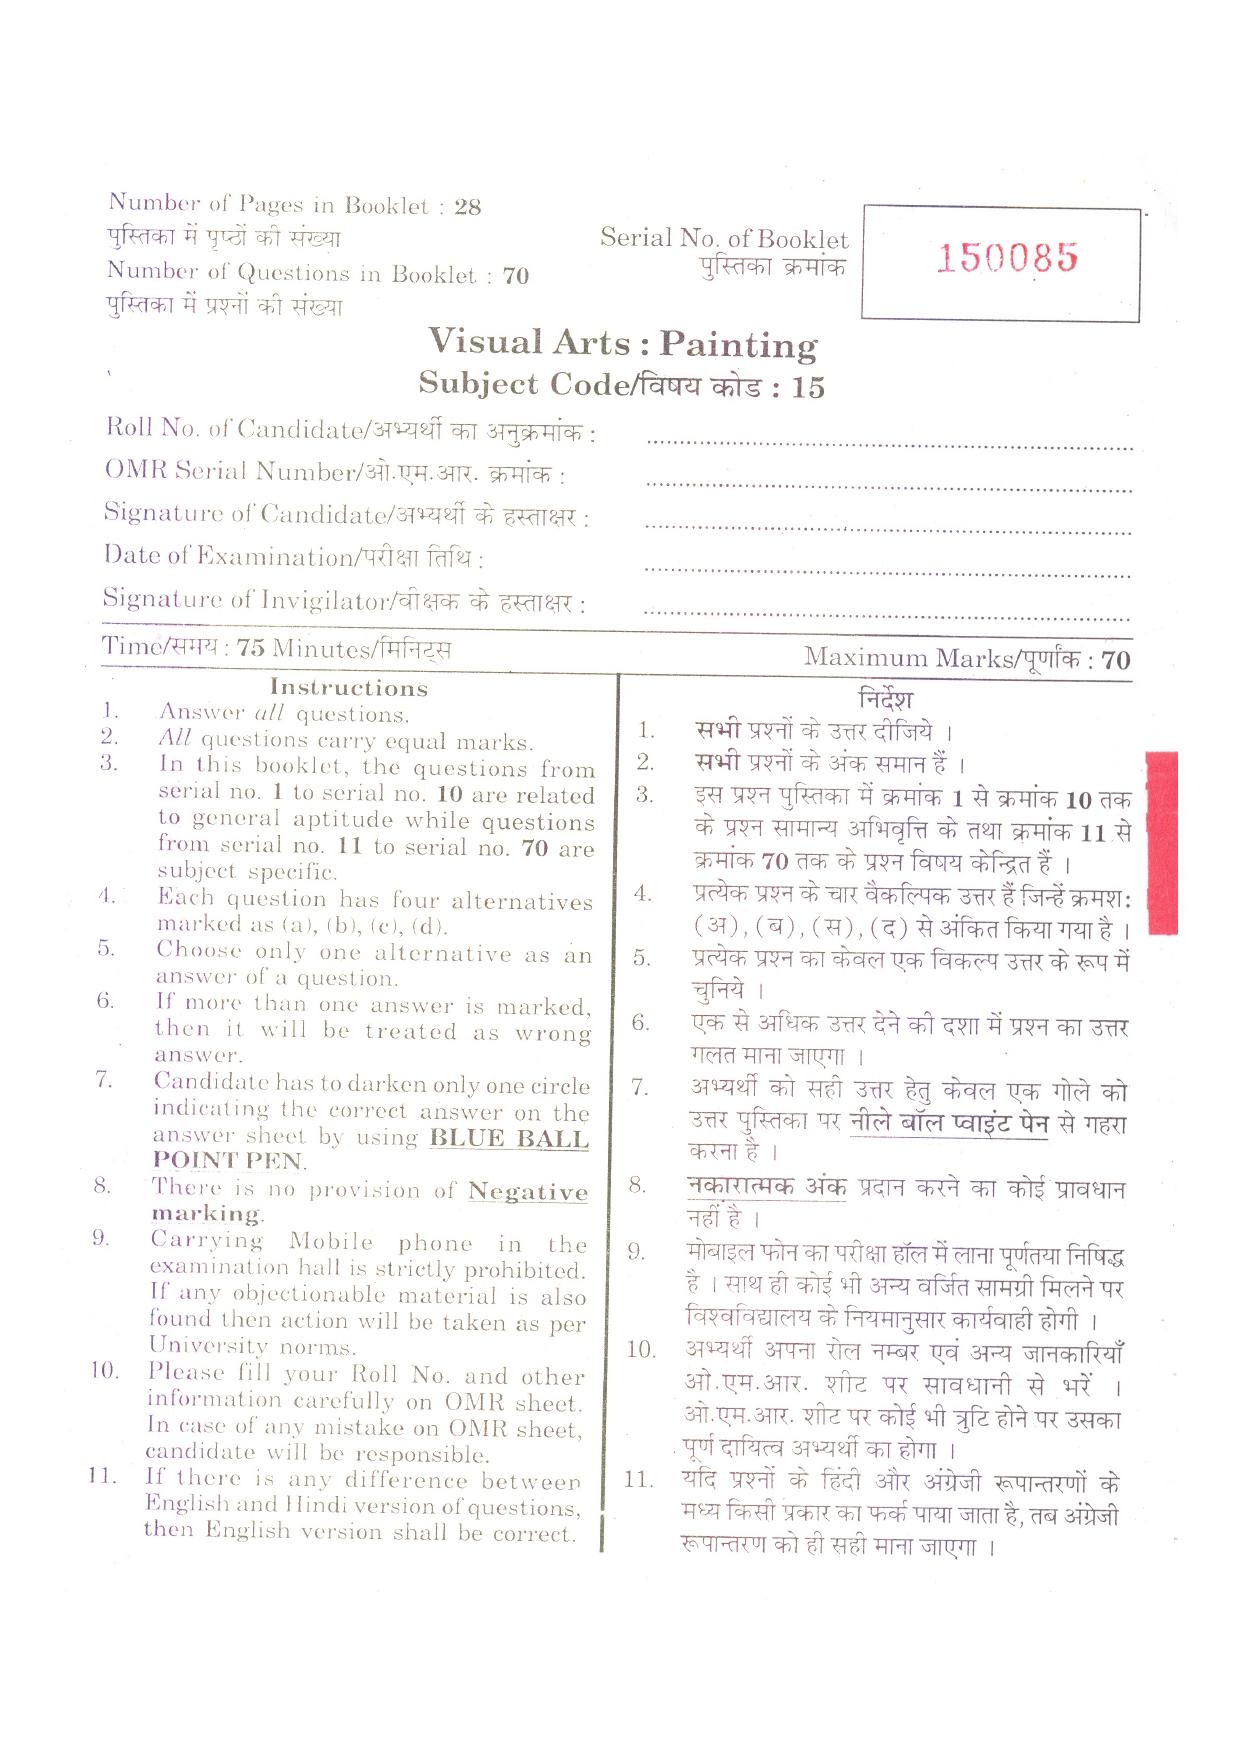 URATPG MVA(painting) 2013 Question Paper - Page 1